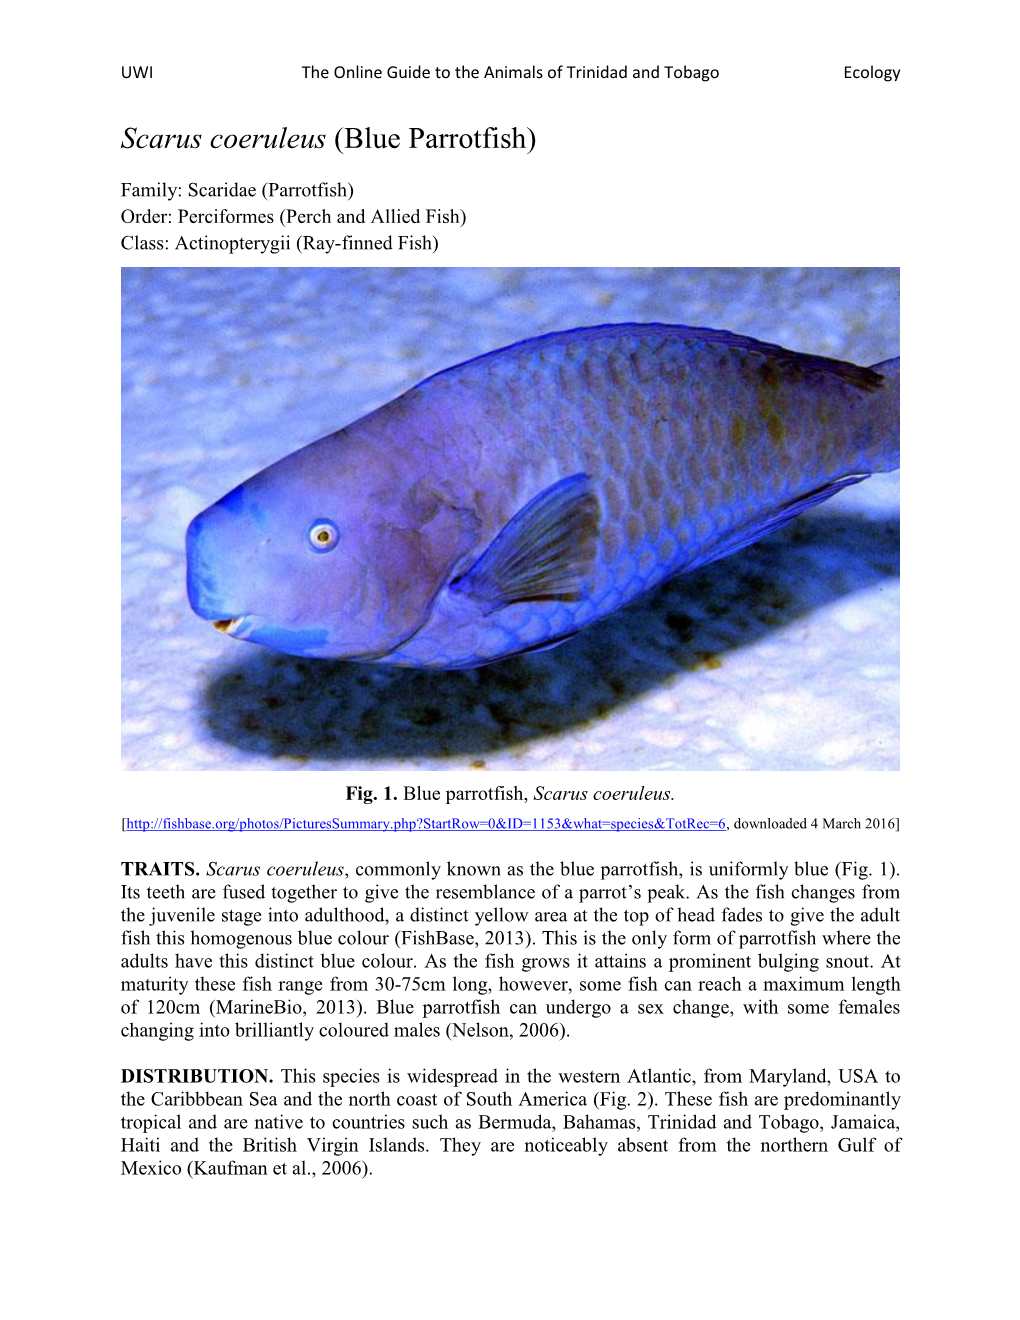 Scarus Coeruleus (Blue Parrotfish)